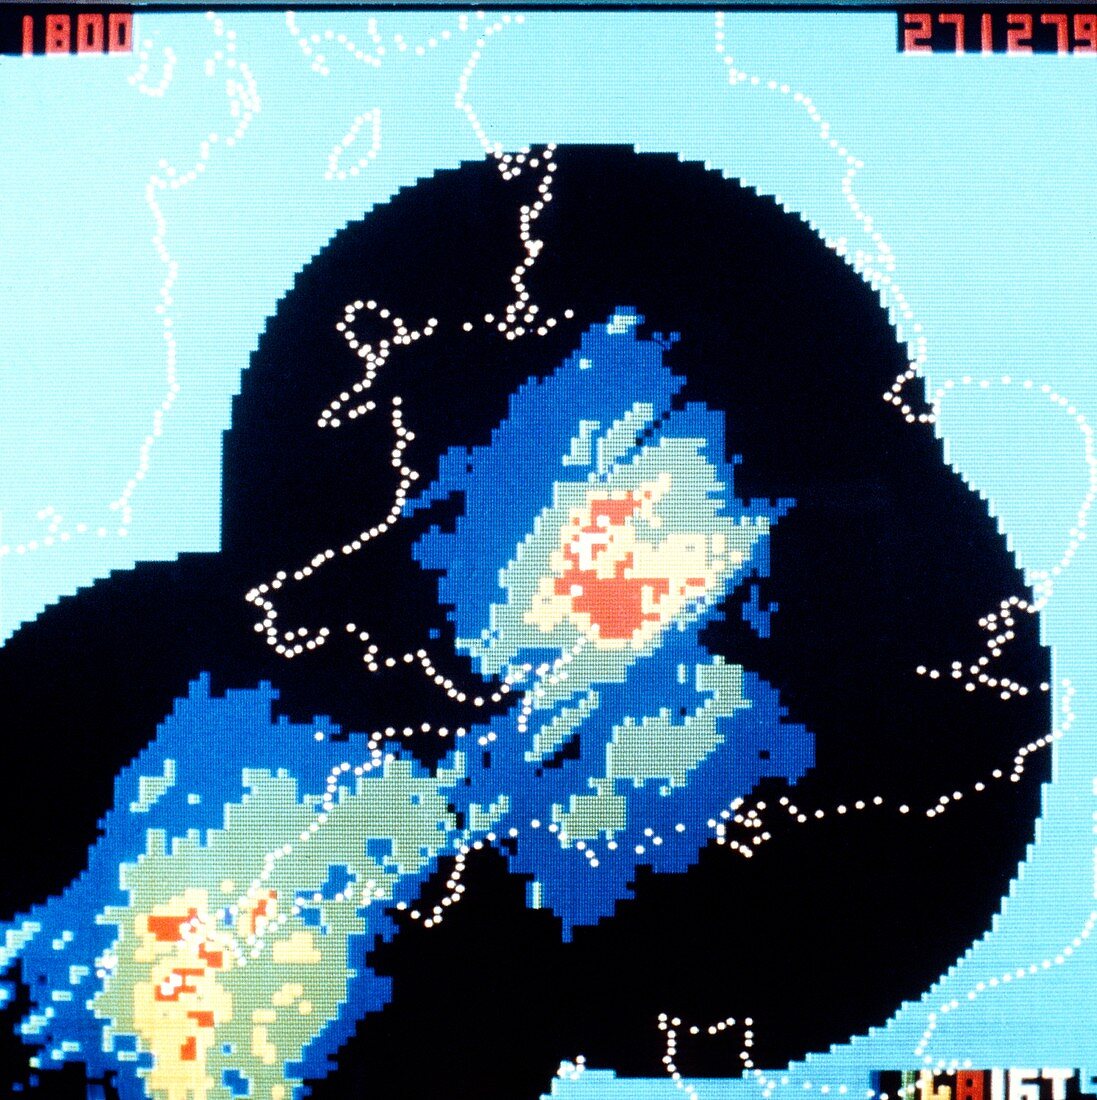 Weather radar display